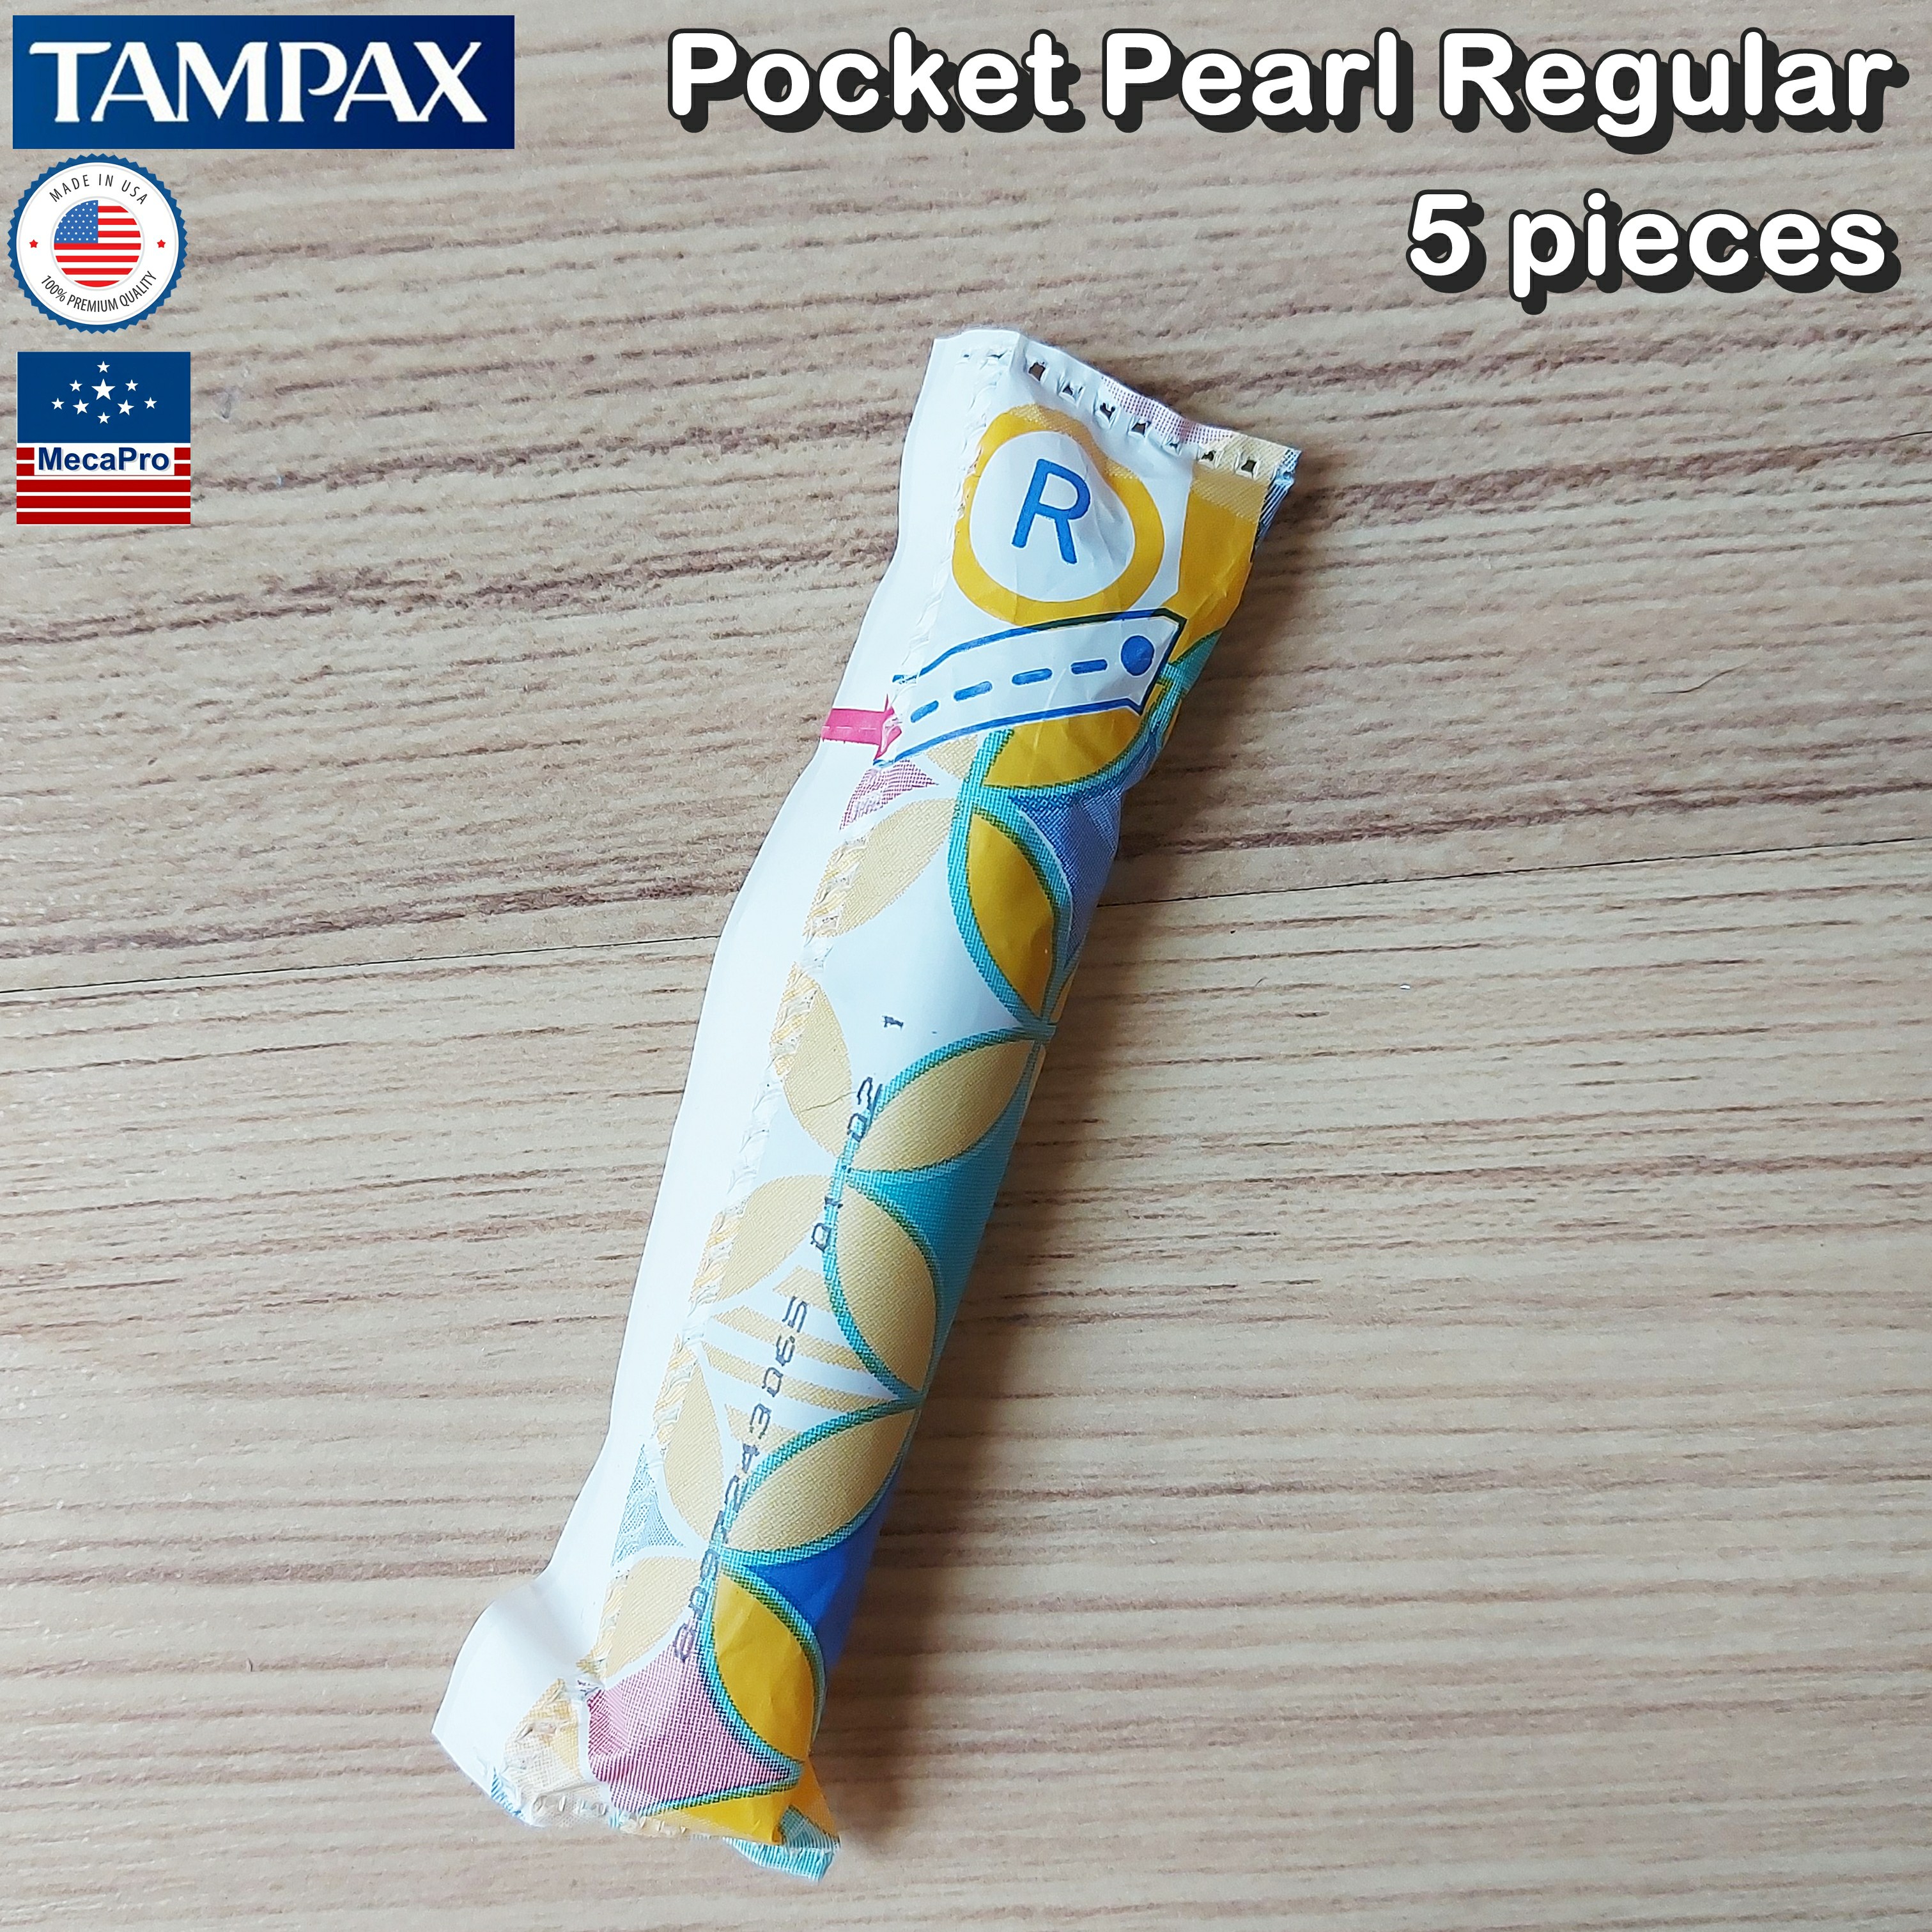 Tampax® Pocket Pearl Plastic Tampons Regular 5 pieces ผ้าอนามัยแบบสอด 5 ชิ้น เหมาะกับวันมาปกติ